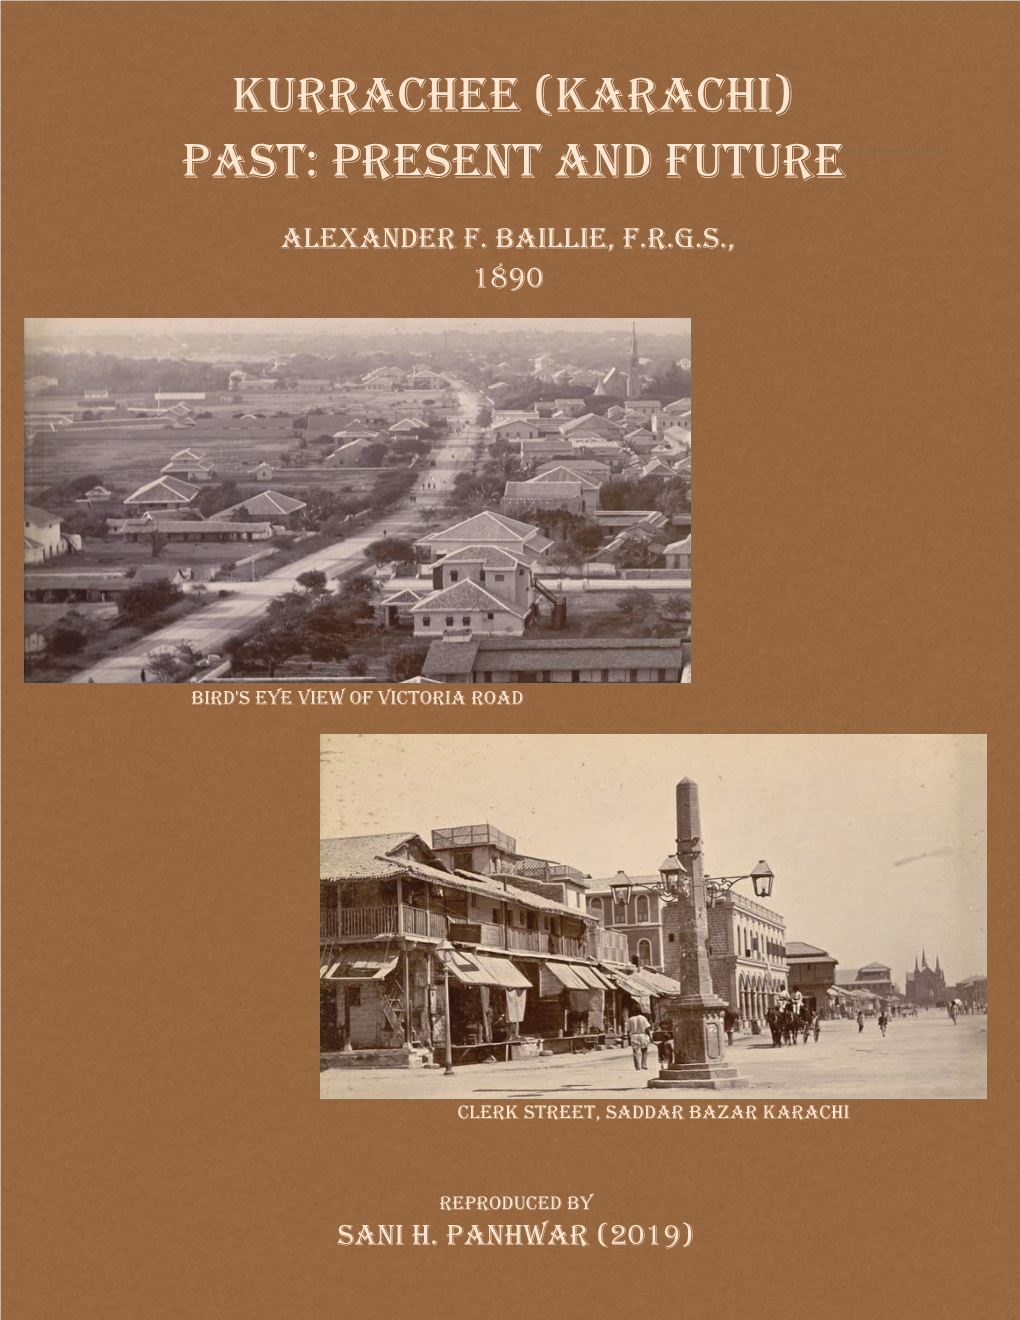 (Karachi) Past: Present and Future